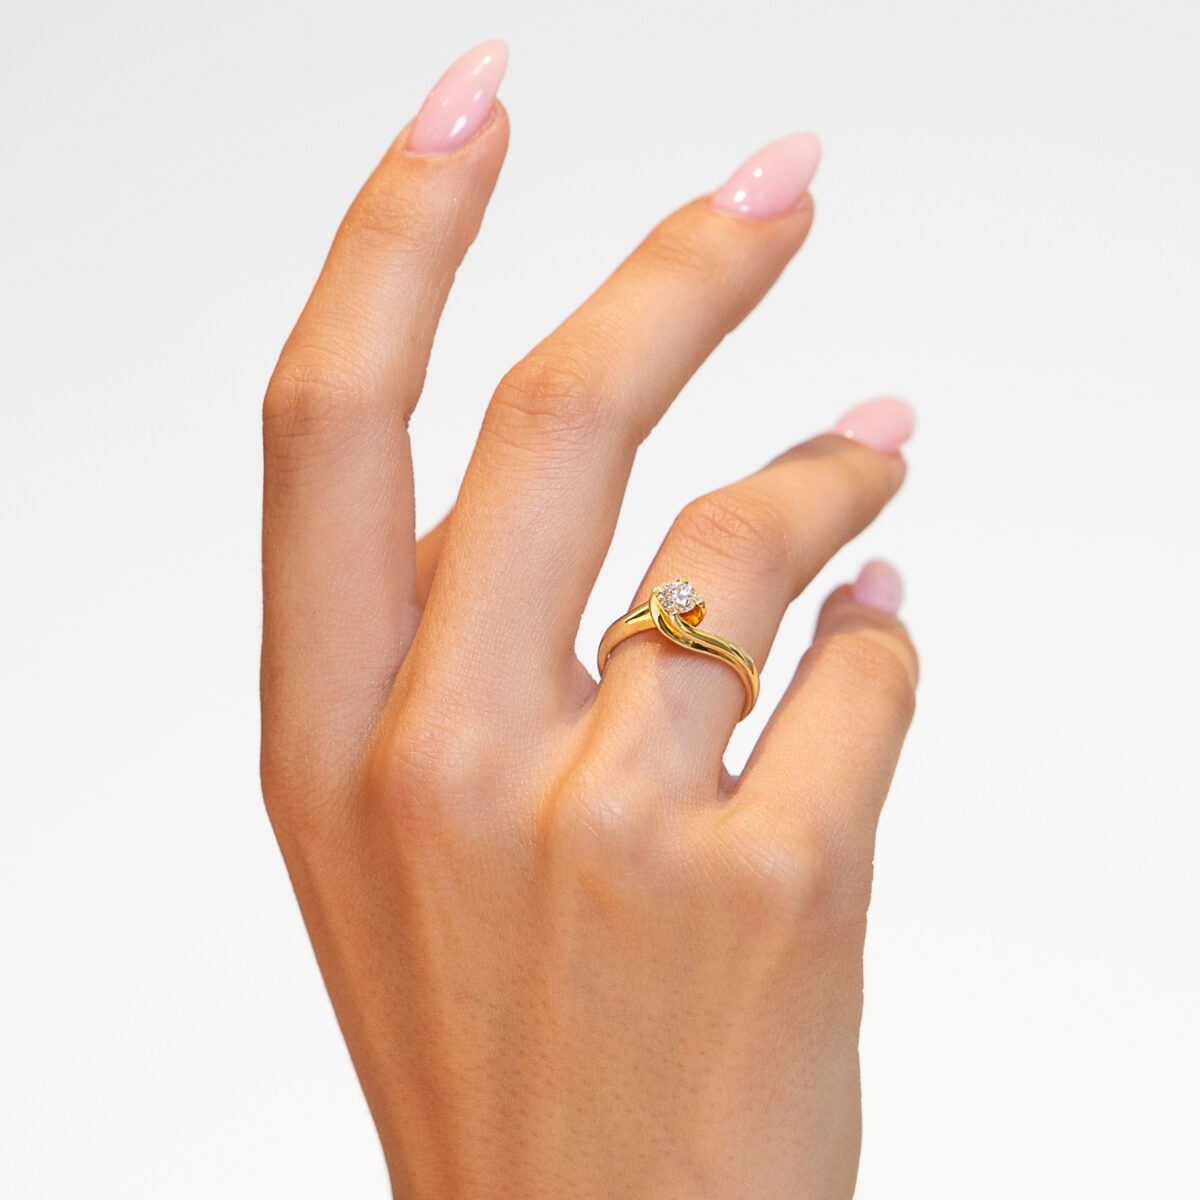 Jewellers - Μονόπετρο δακτυλίδι φλόγα με μπριγιάν